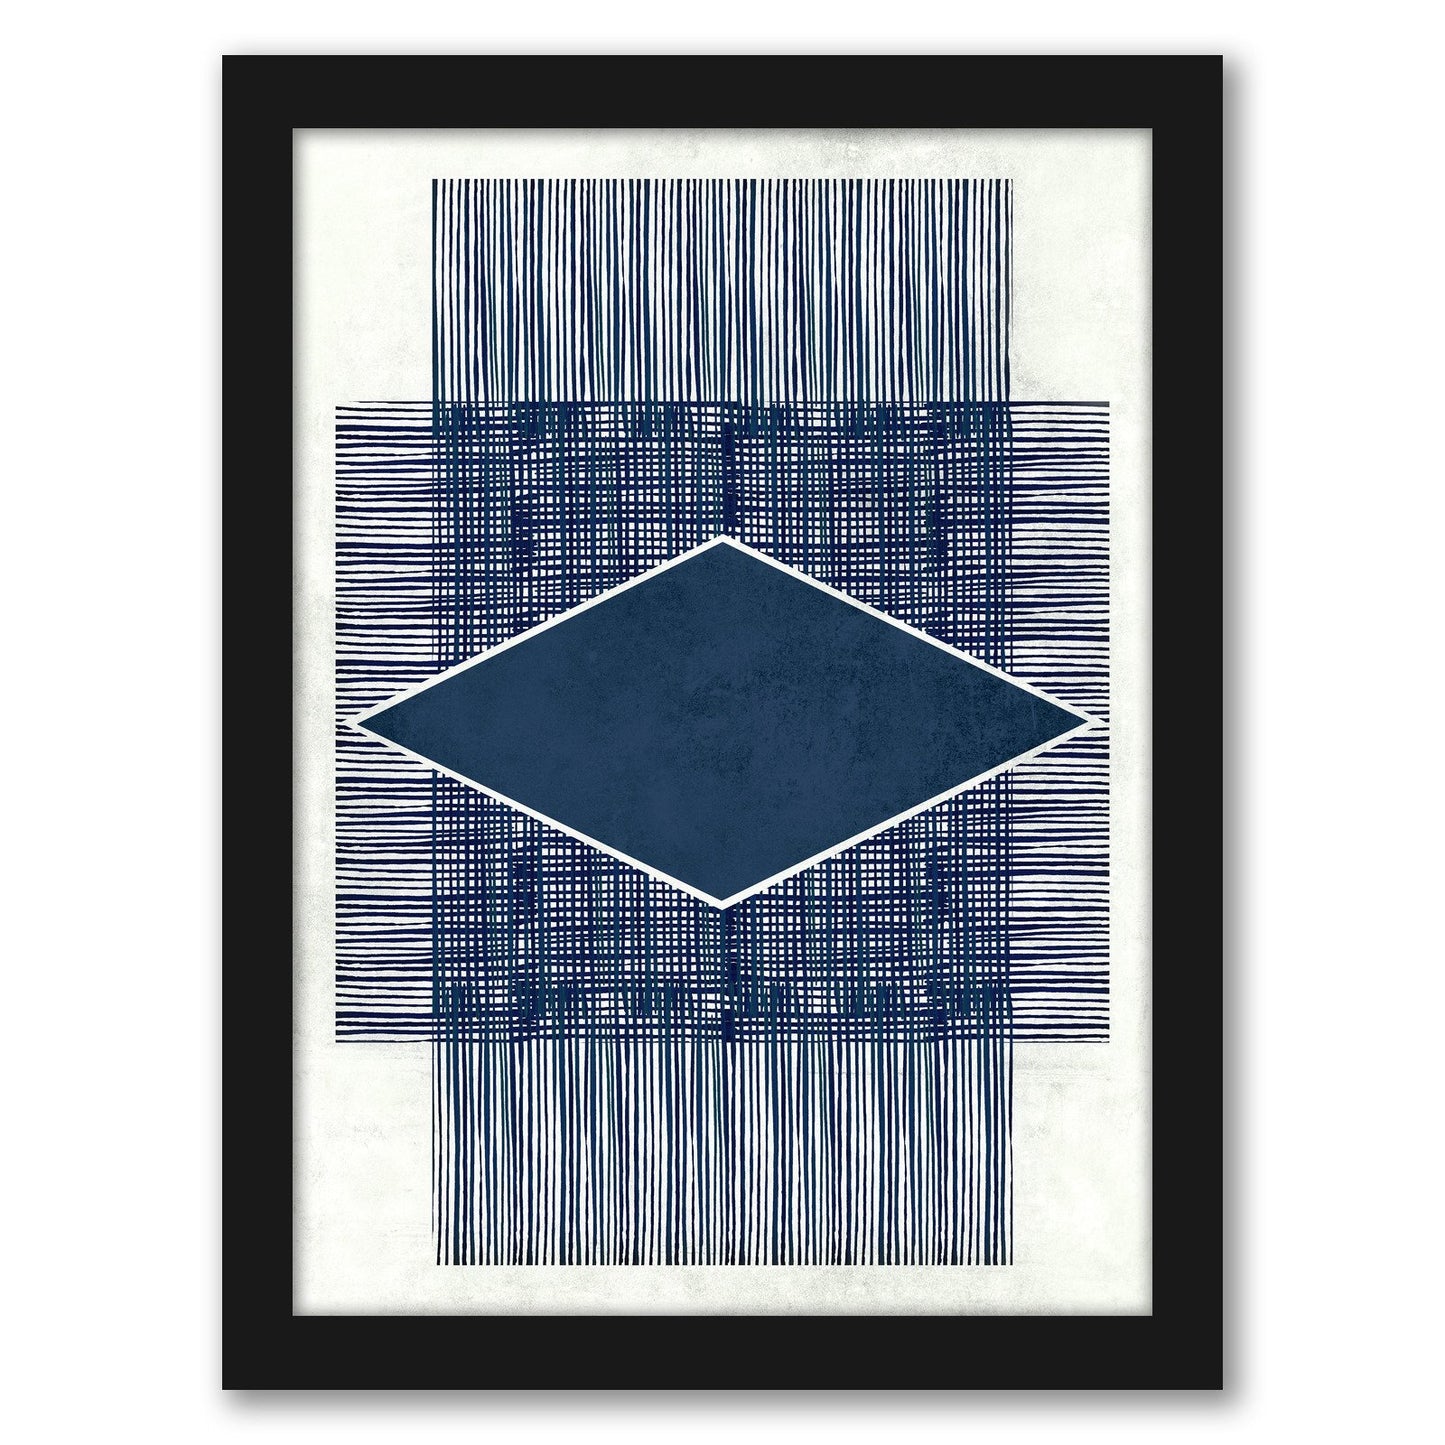 Blue Ink 2 by Hope Bainbridge - Black Framed Print - Wall Art - Americanflat